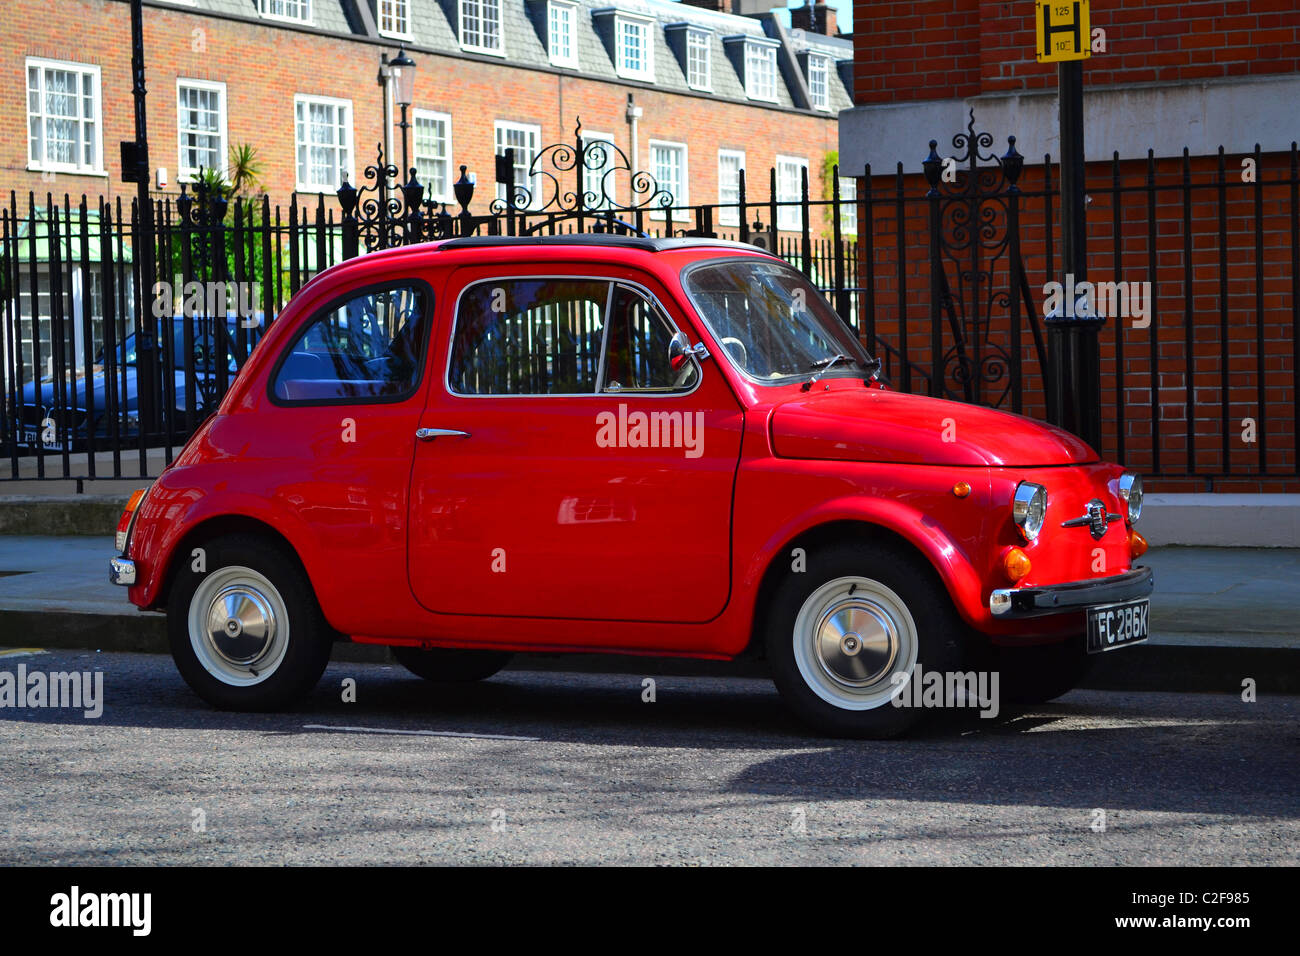 Old Fiat Cinquecento, Chelsea, London, UK ARTIFEX LUCIS Stock Photo